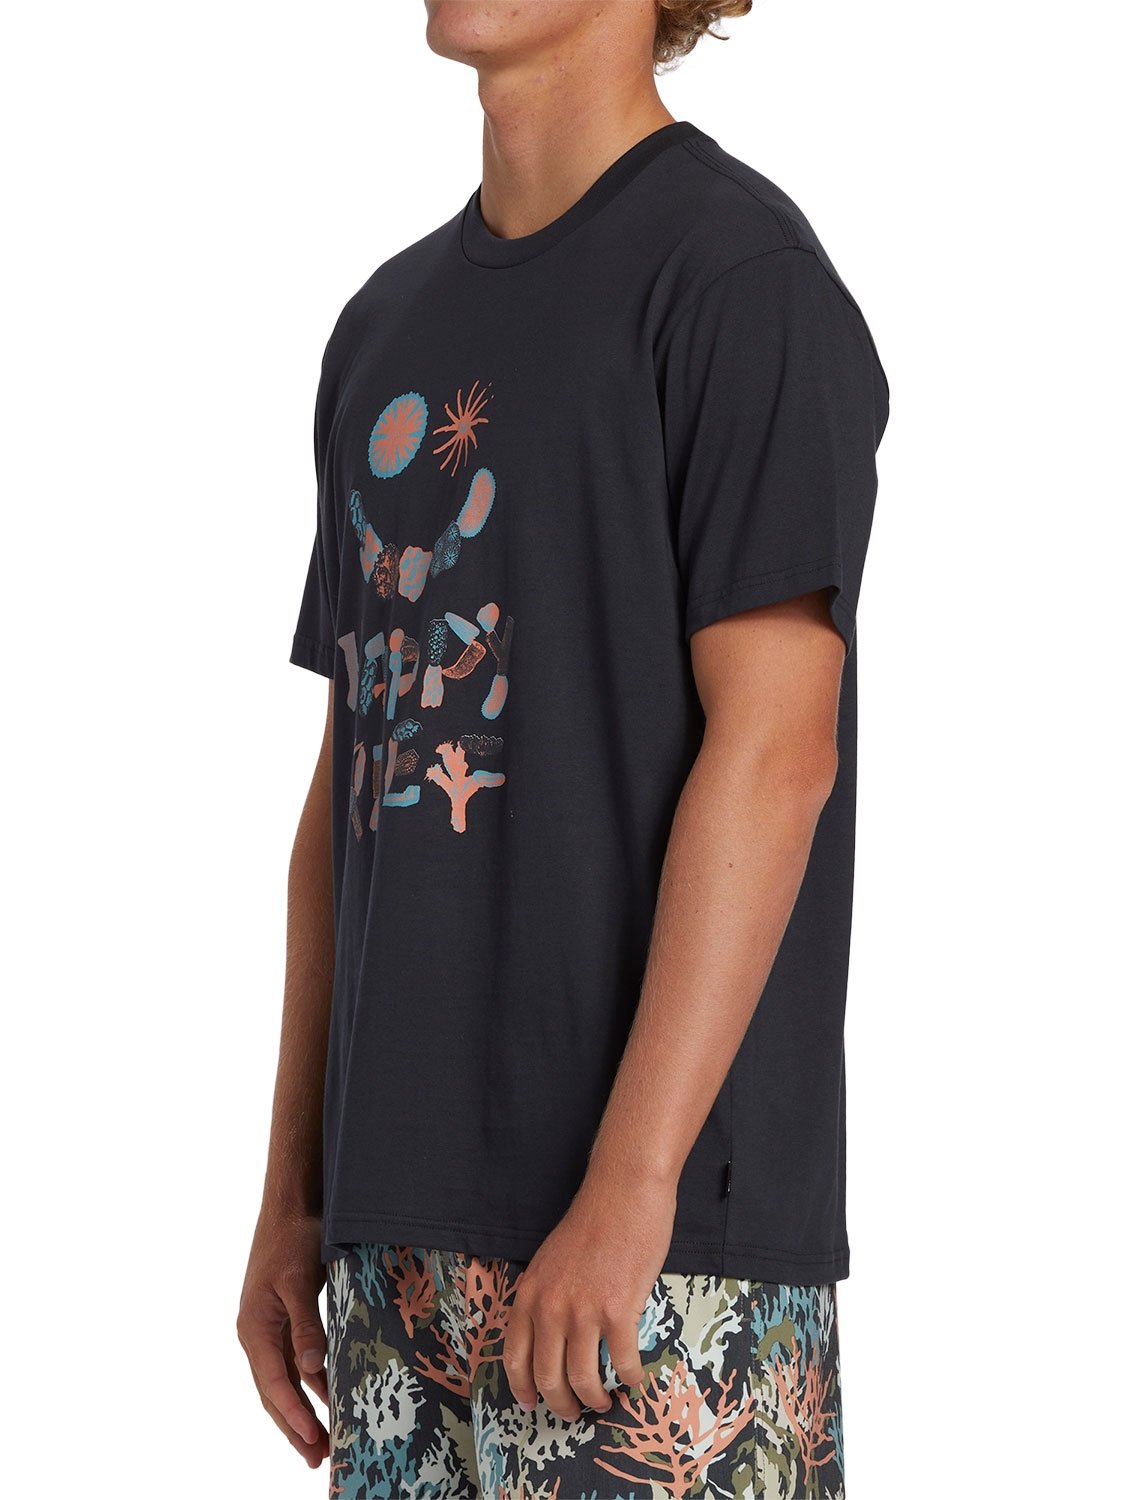 Billabong Men's Happy Reef T-Shirt